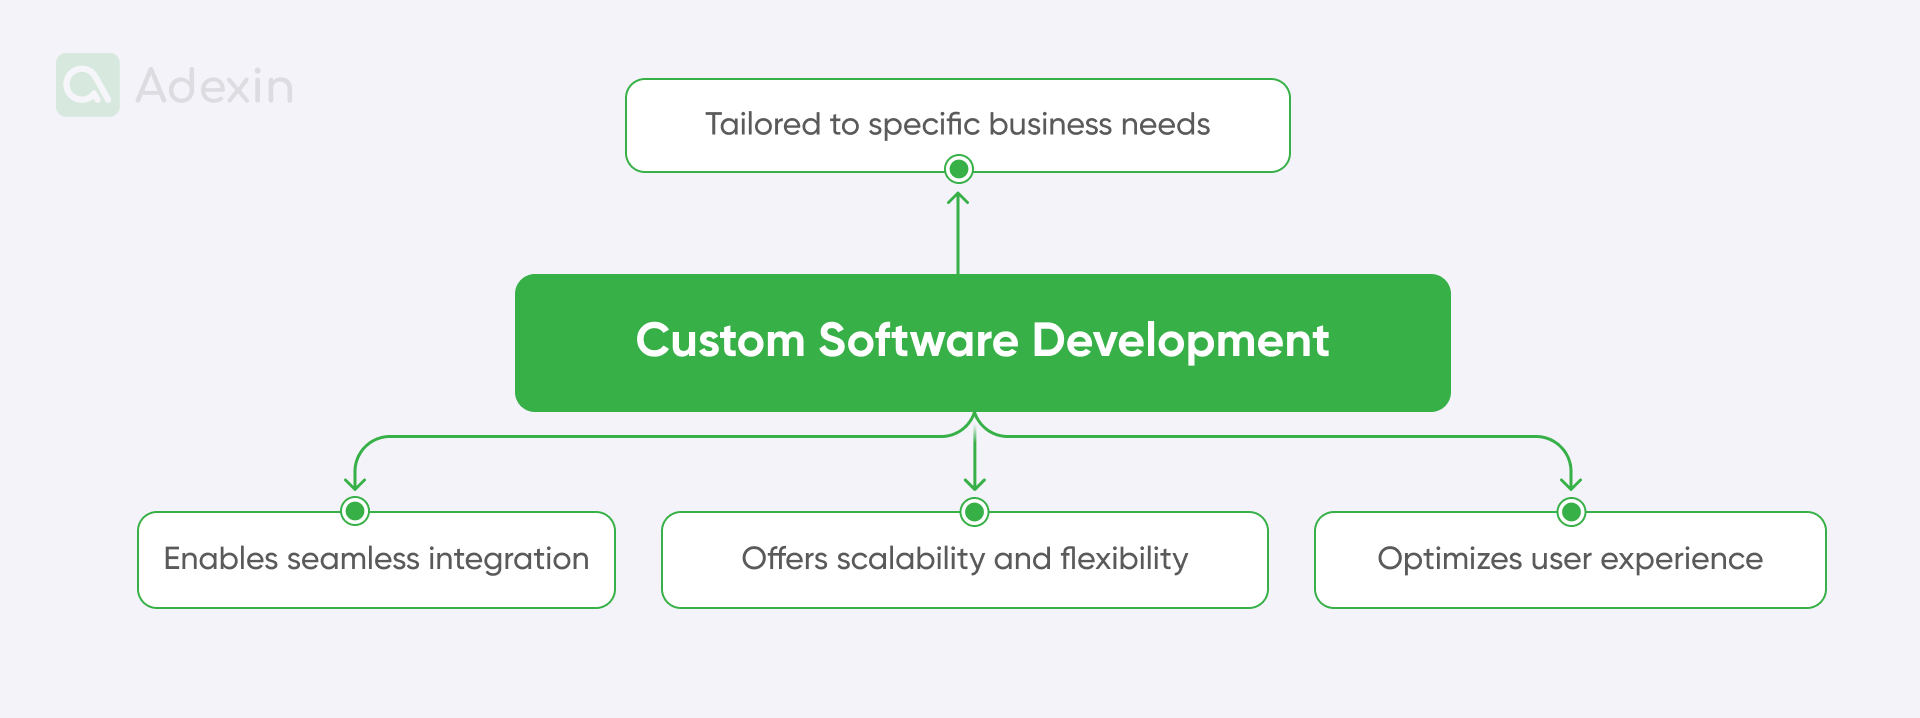 Advantages of custom software development